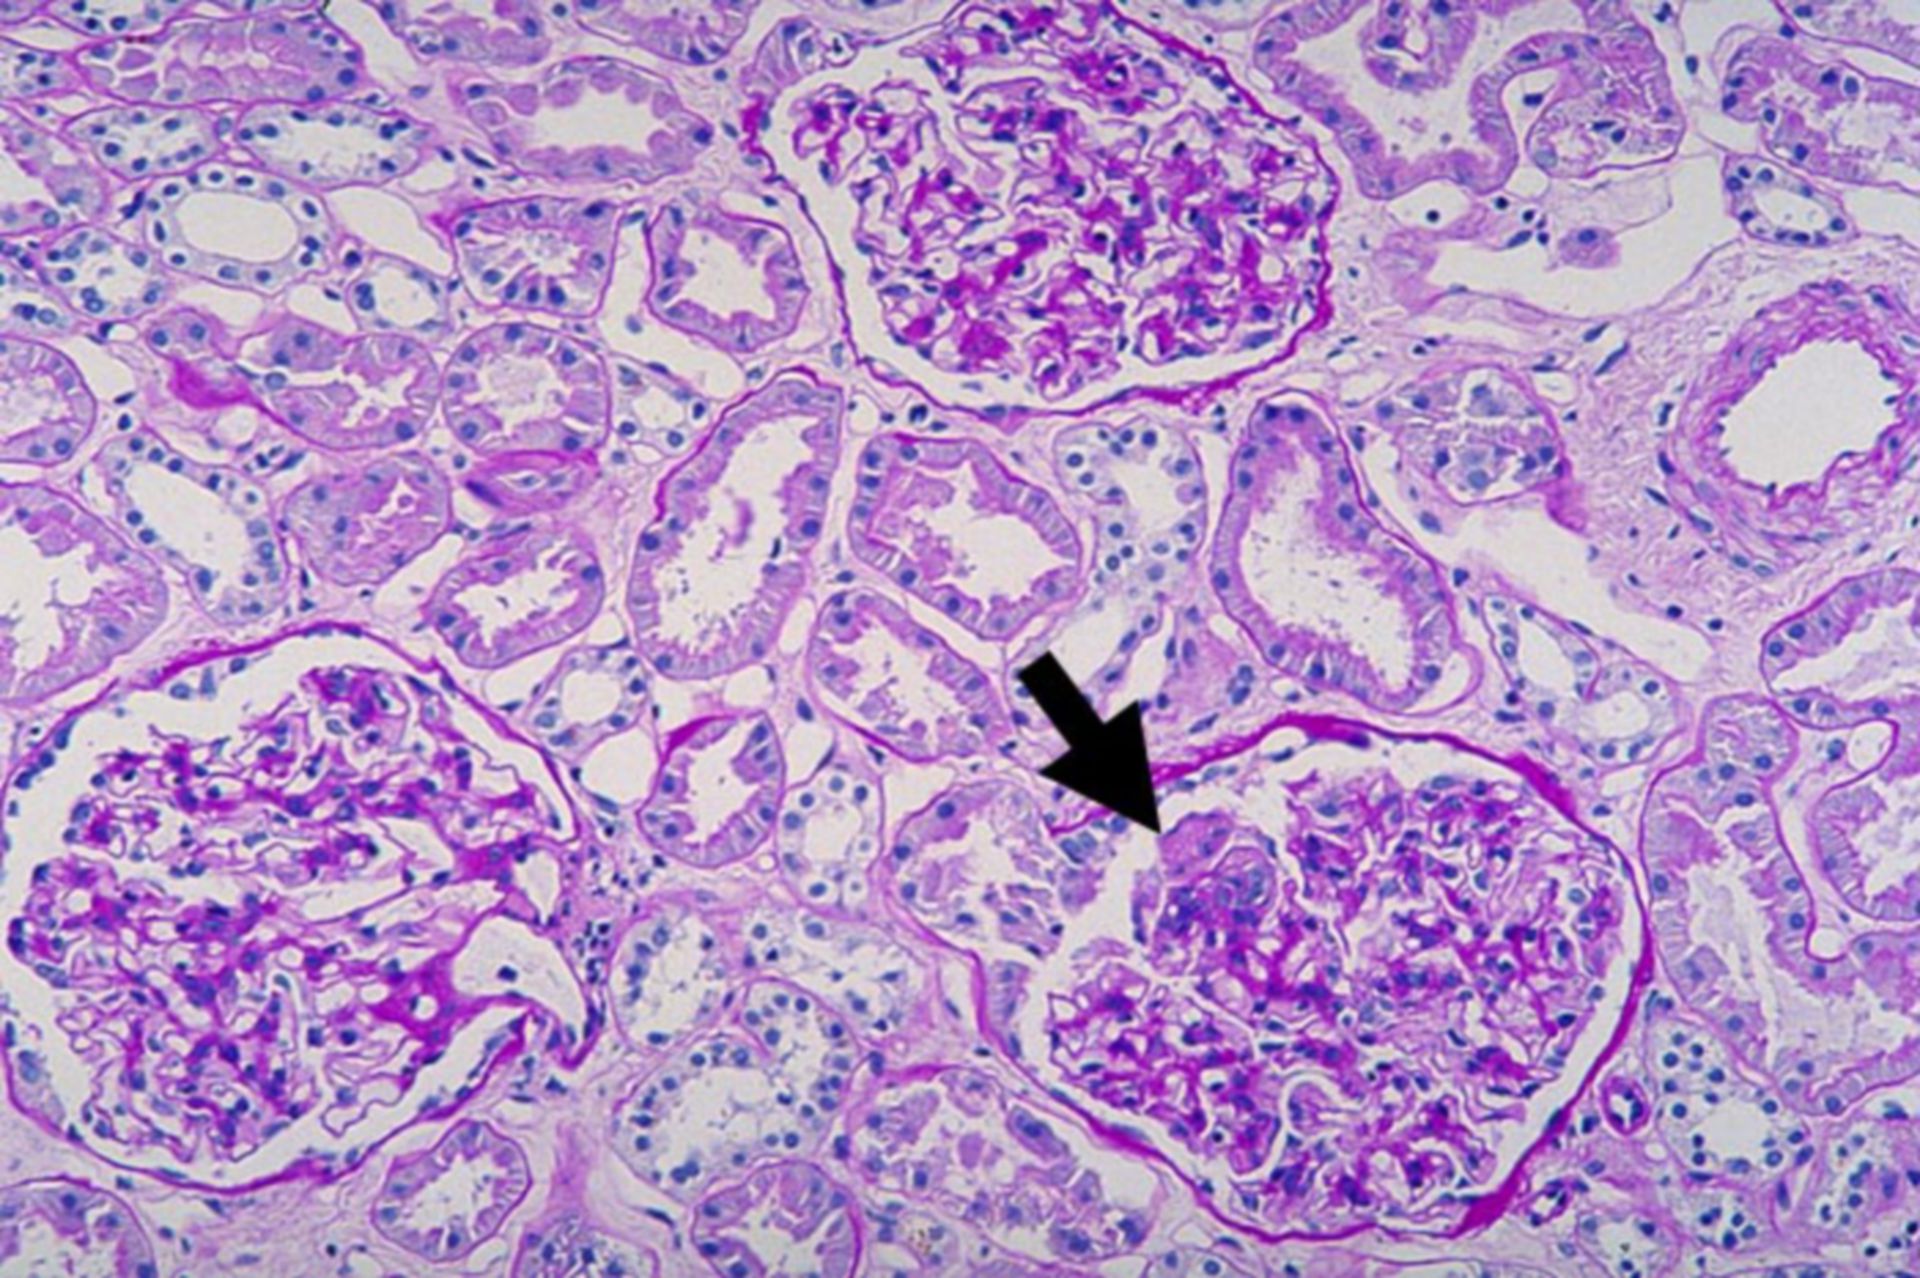 Purpura Schönlein Henoch: proliferative Glomerulonephritis (PAS-Färbung)